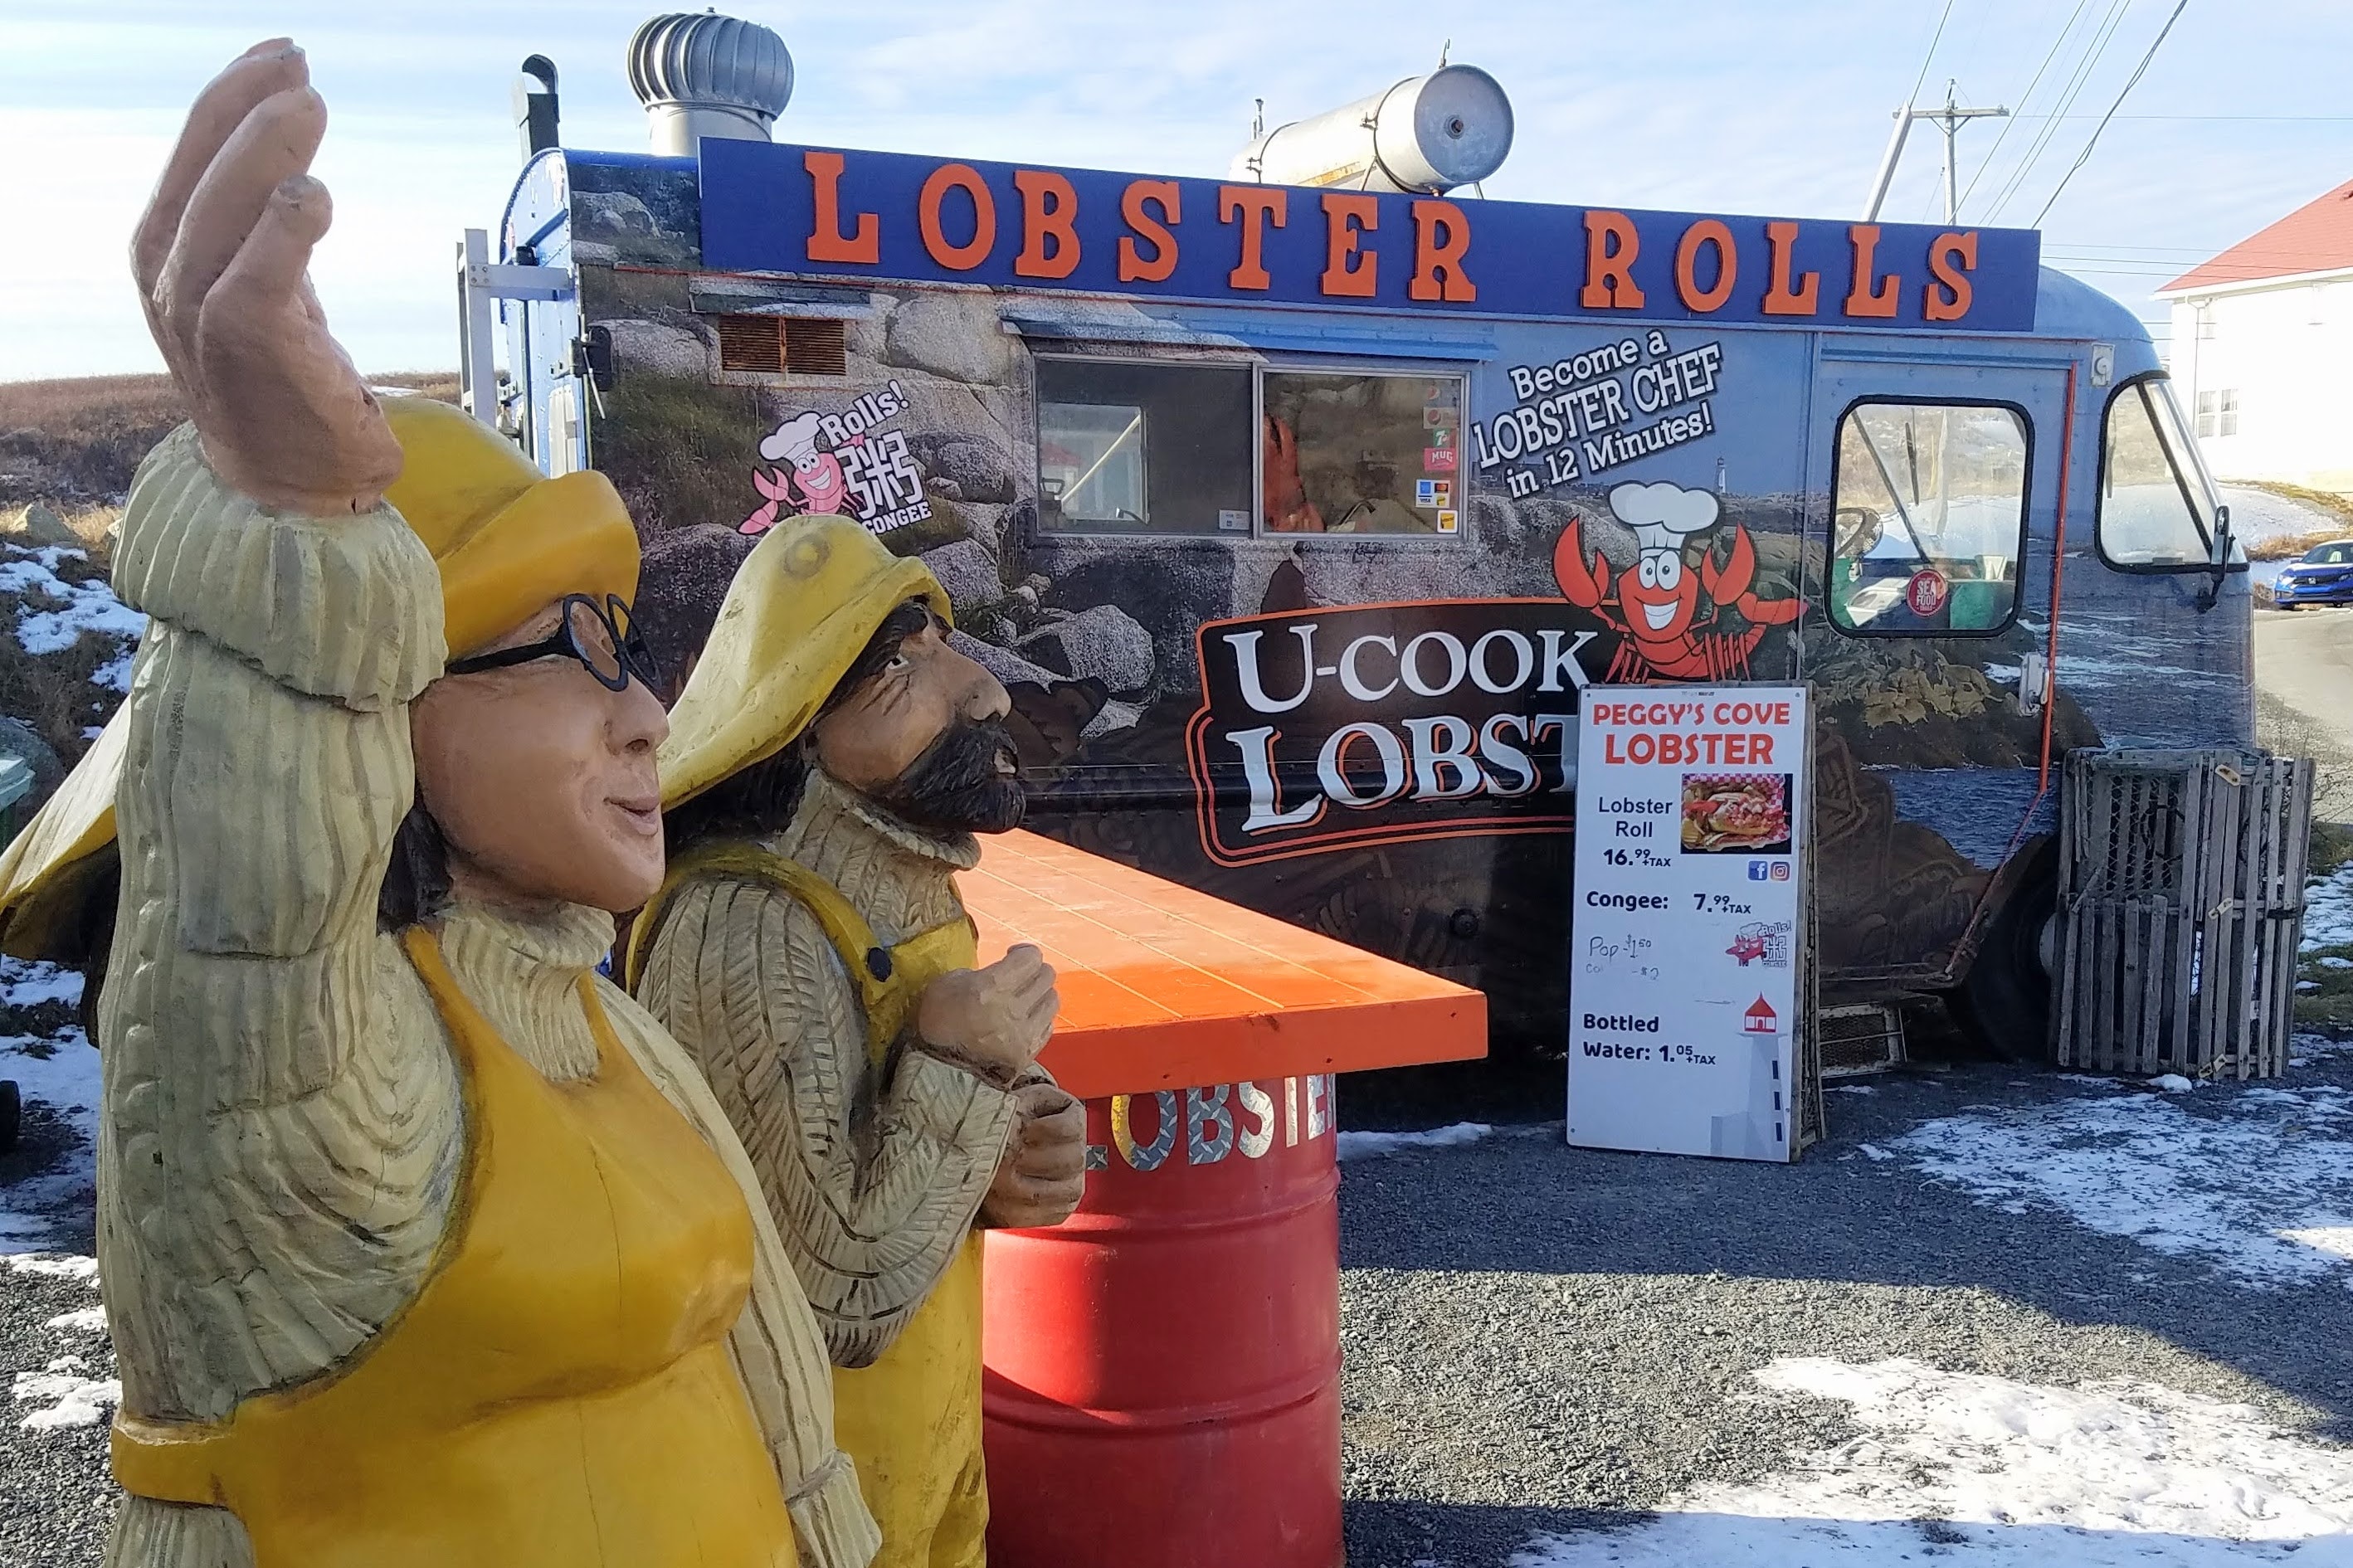 lobster-rolls-food-truck-nova-scotia-canada.jpg